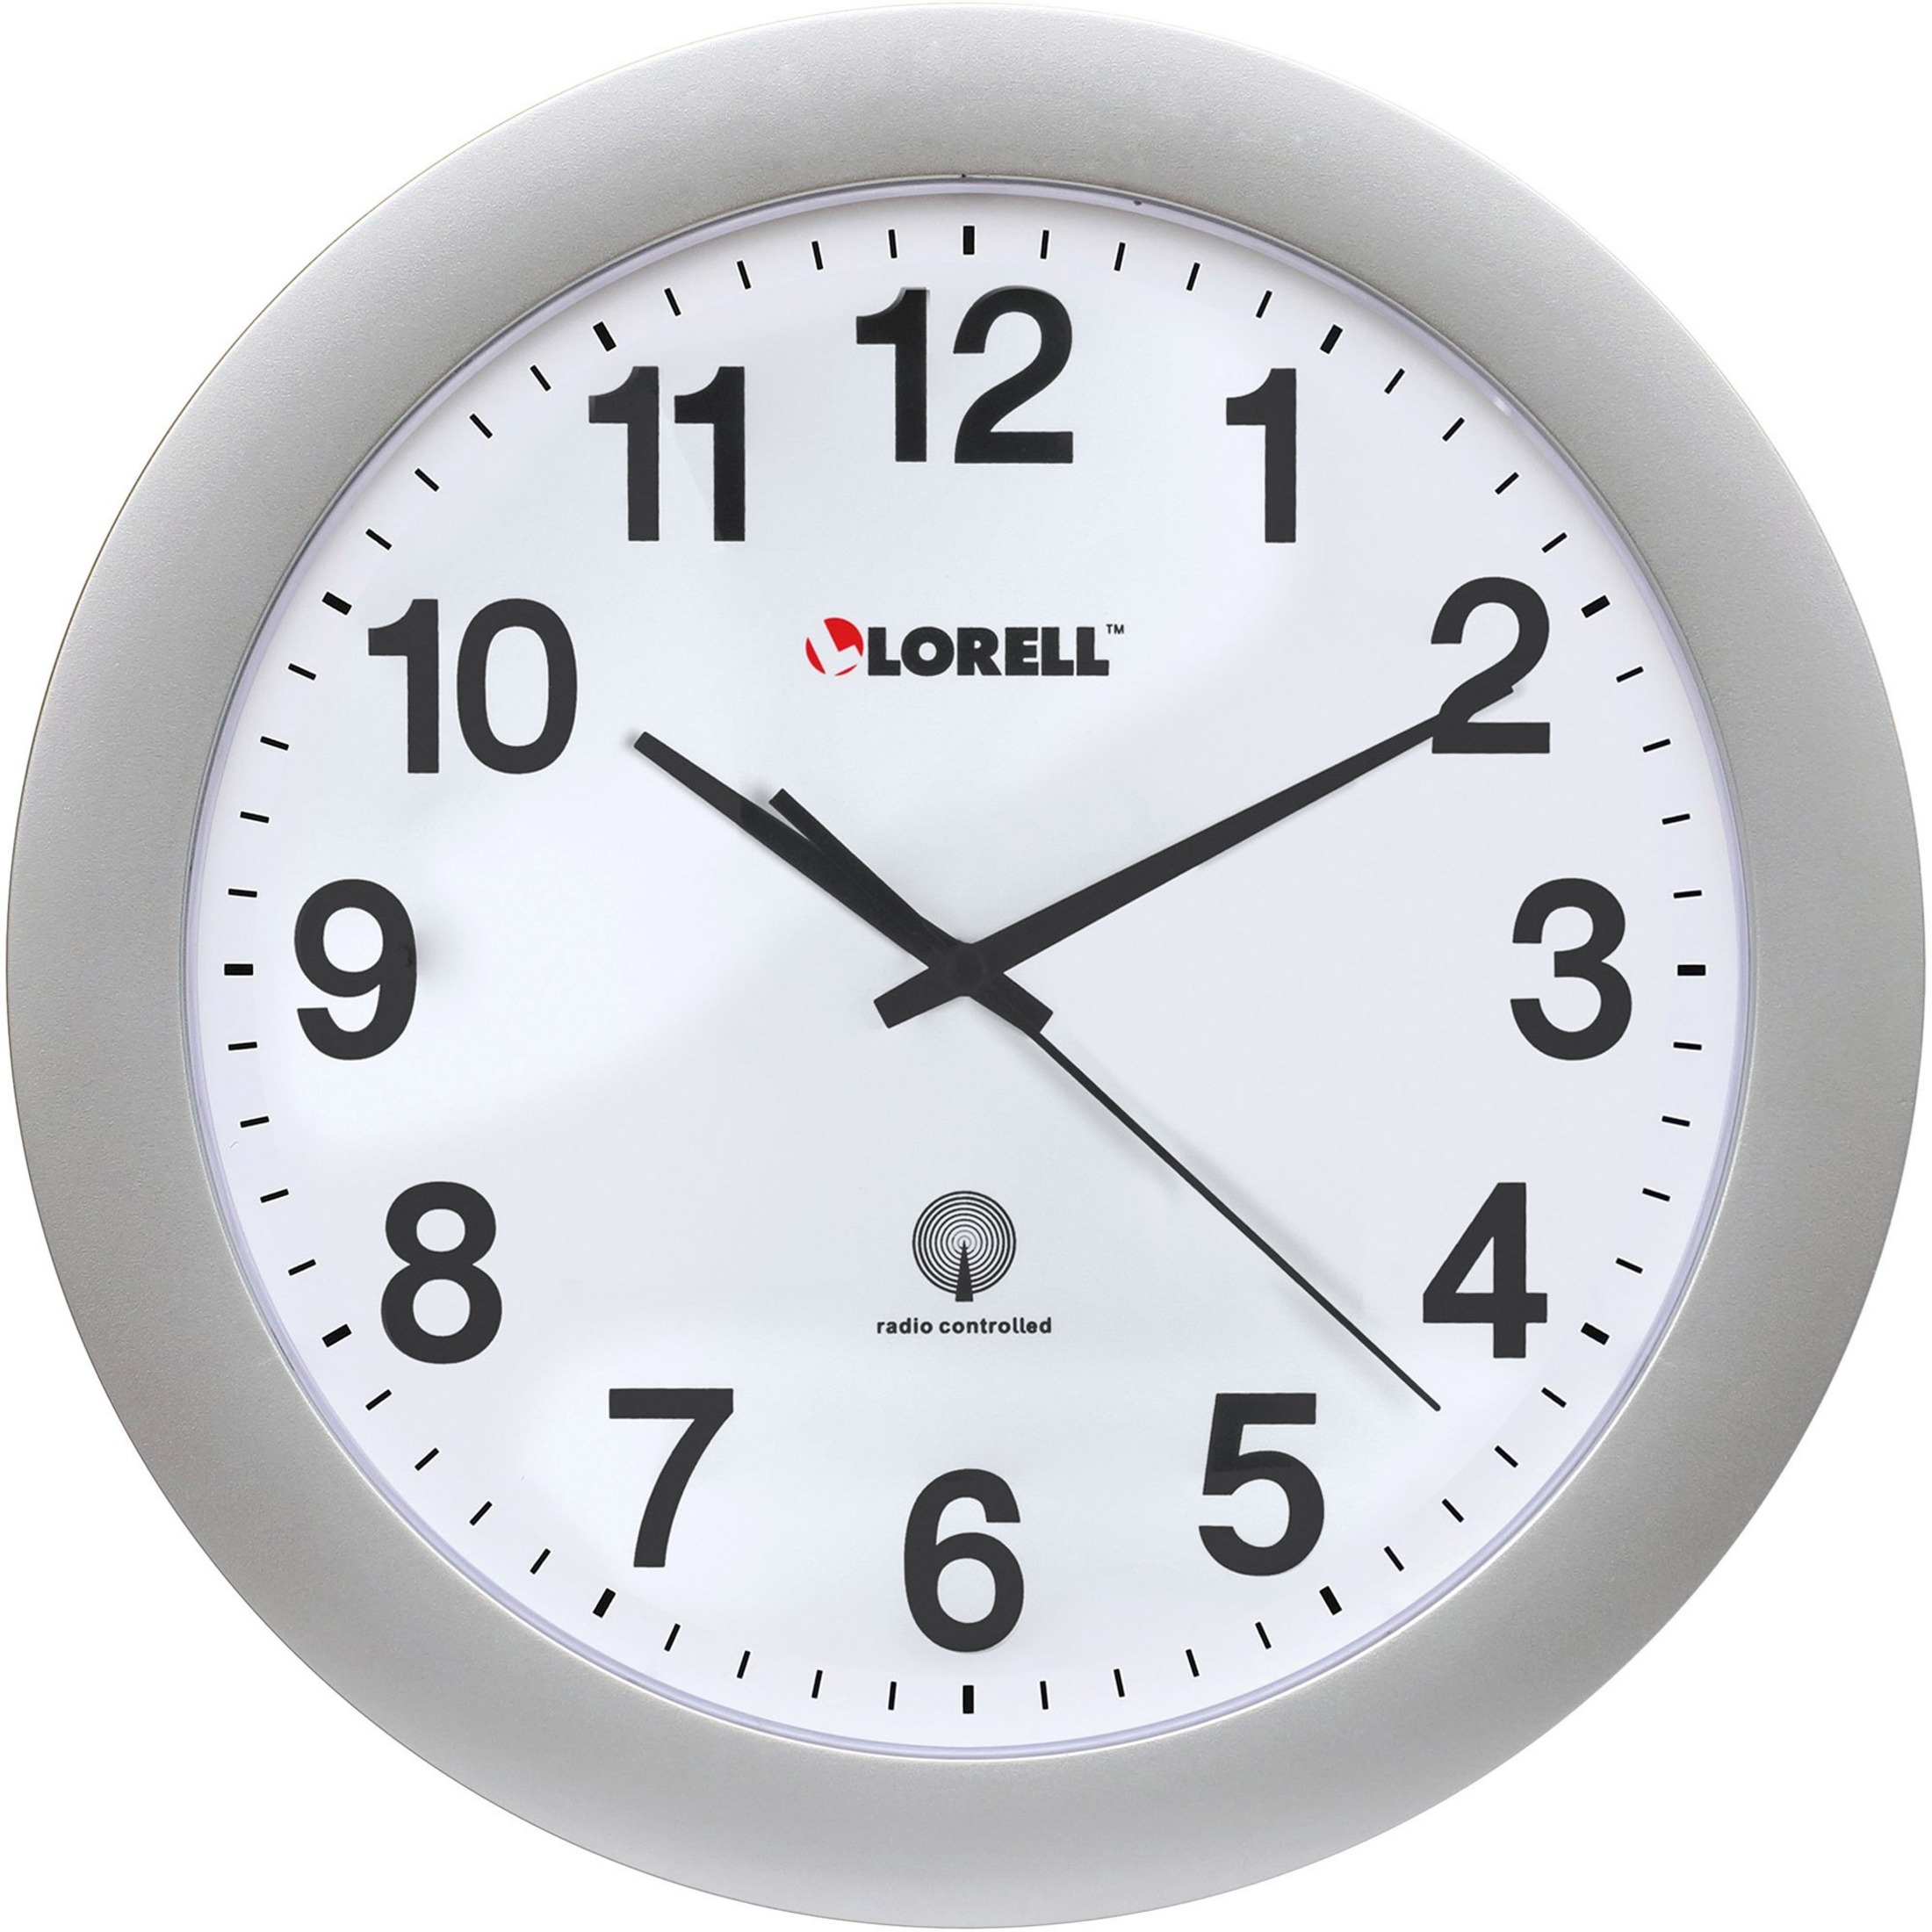 Lorell Llr60996 12 Round Radio Controlled Wall Clock 1